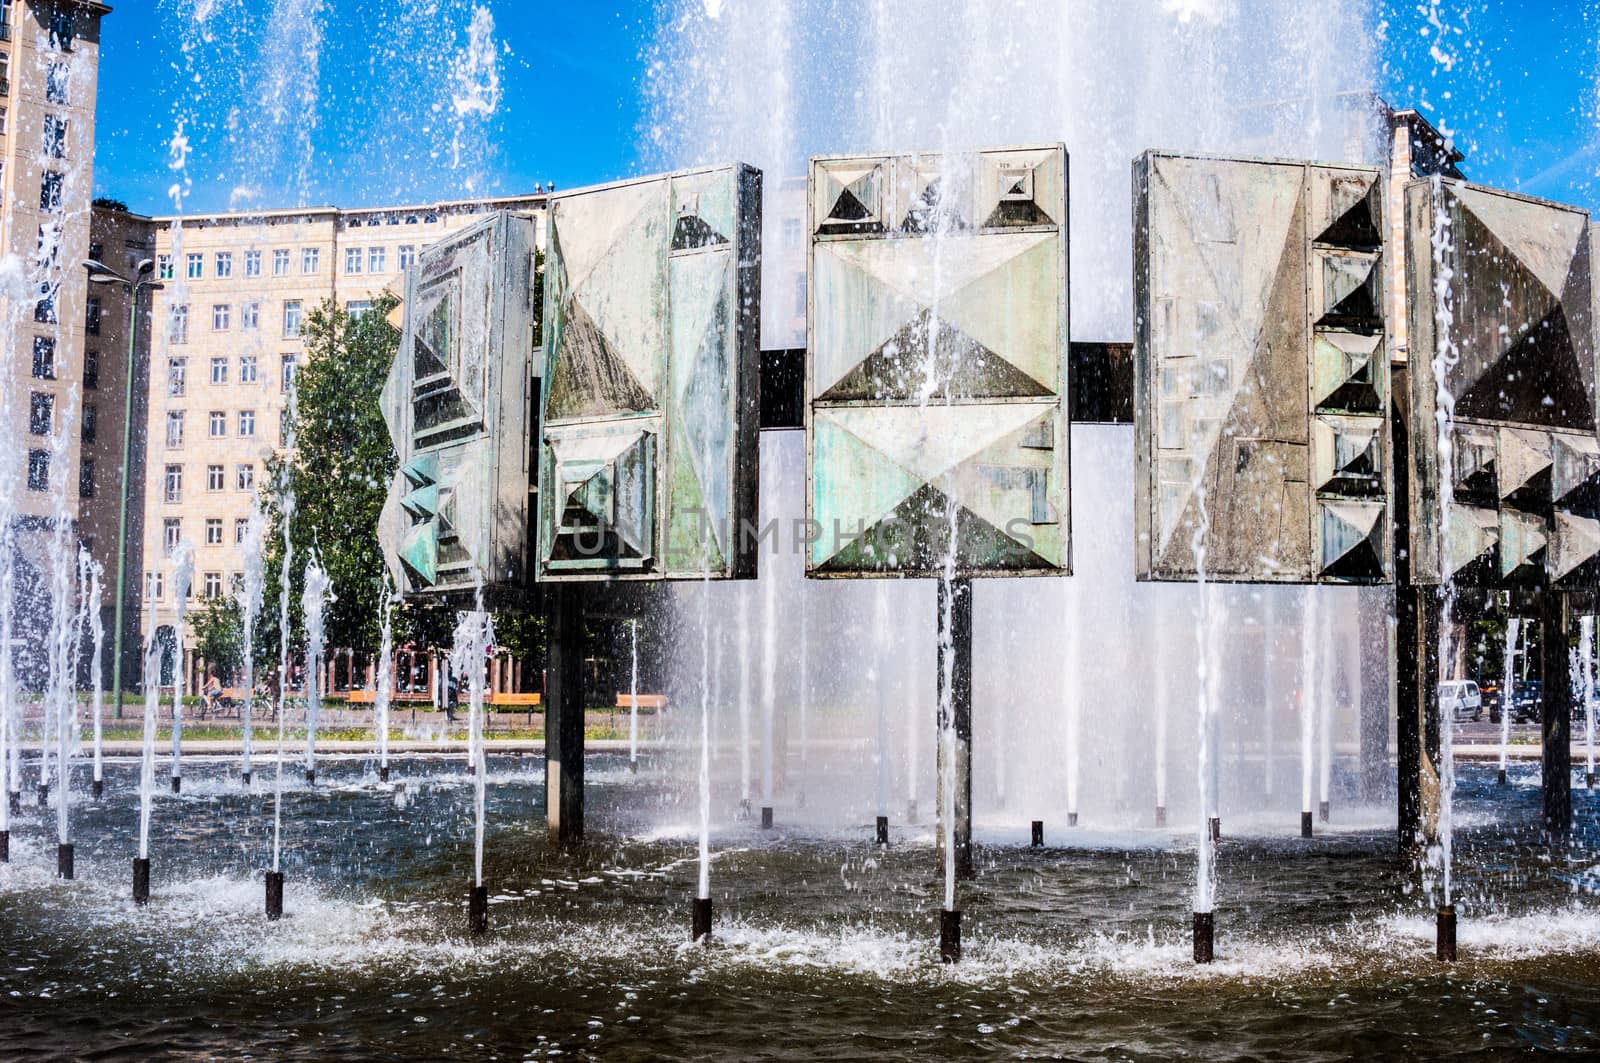 fountain at the Strausberger Platz in Berlin